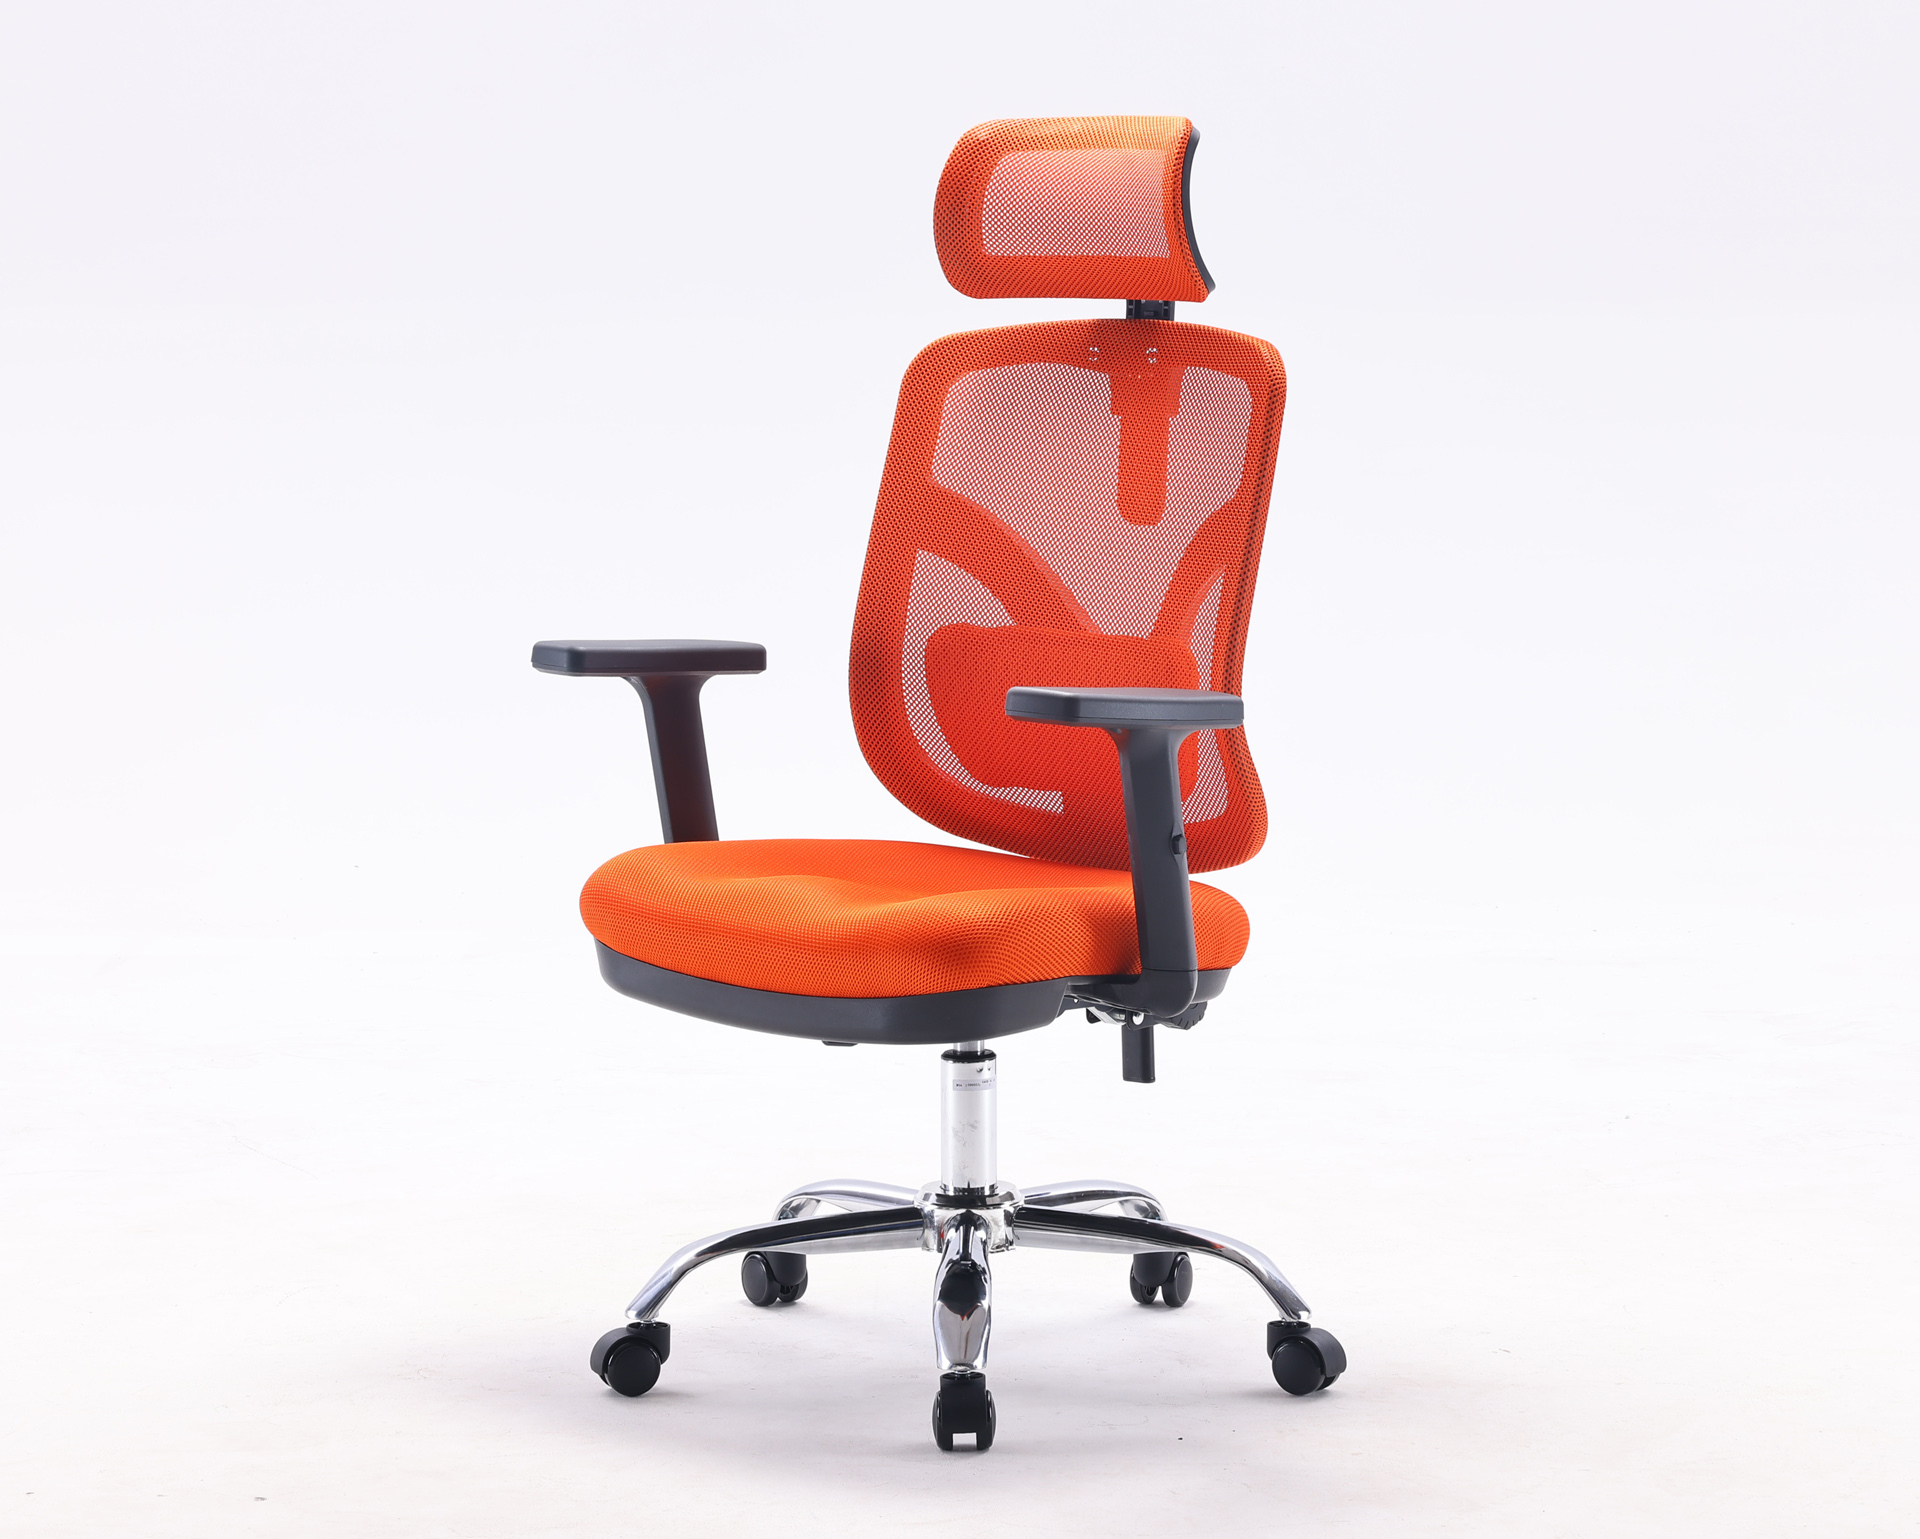 Office chairs - Sihoo's M56 All Mesh Ergonomic Chair